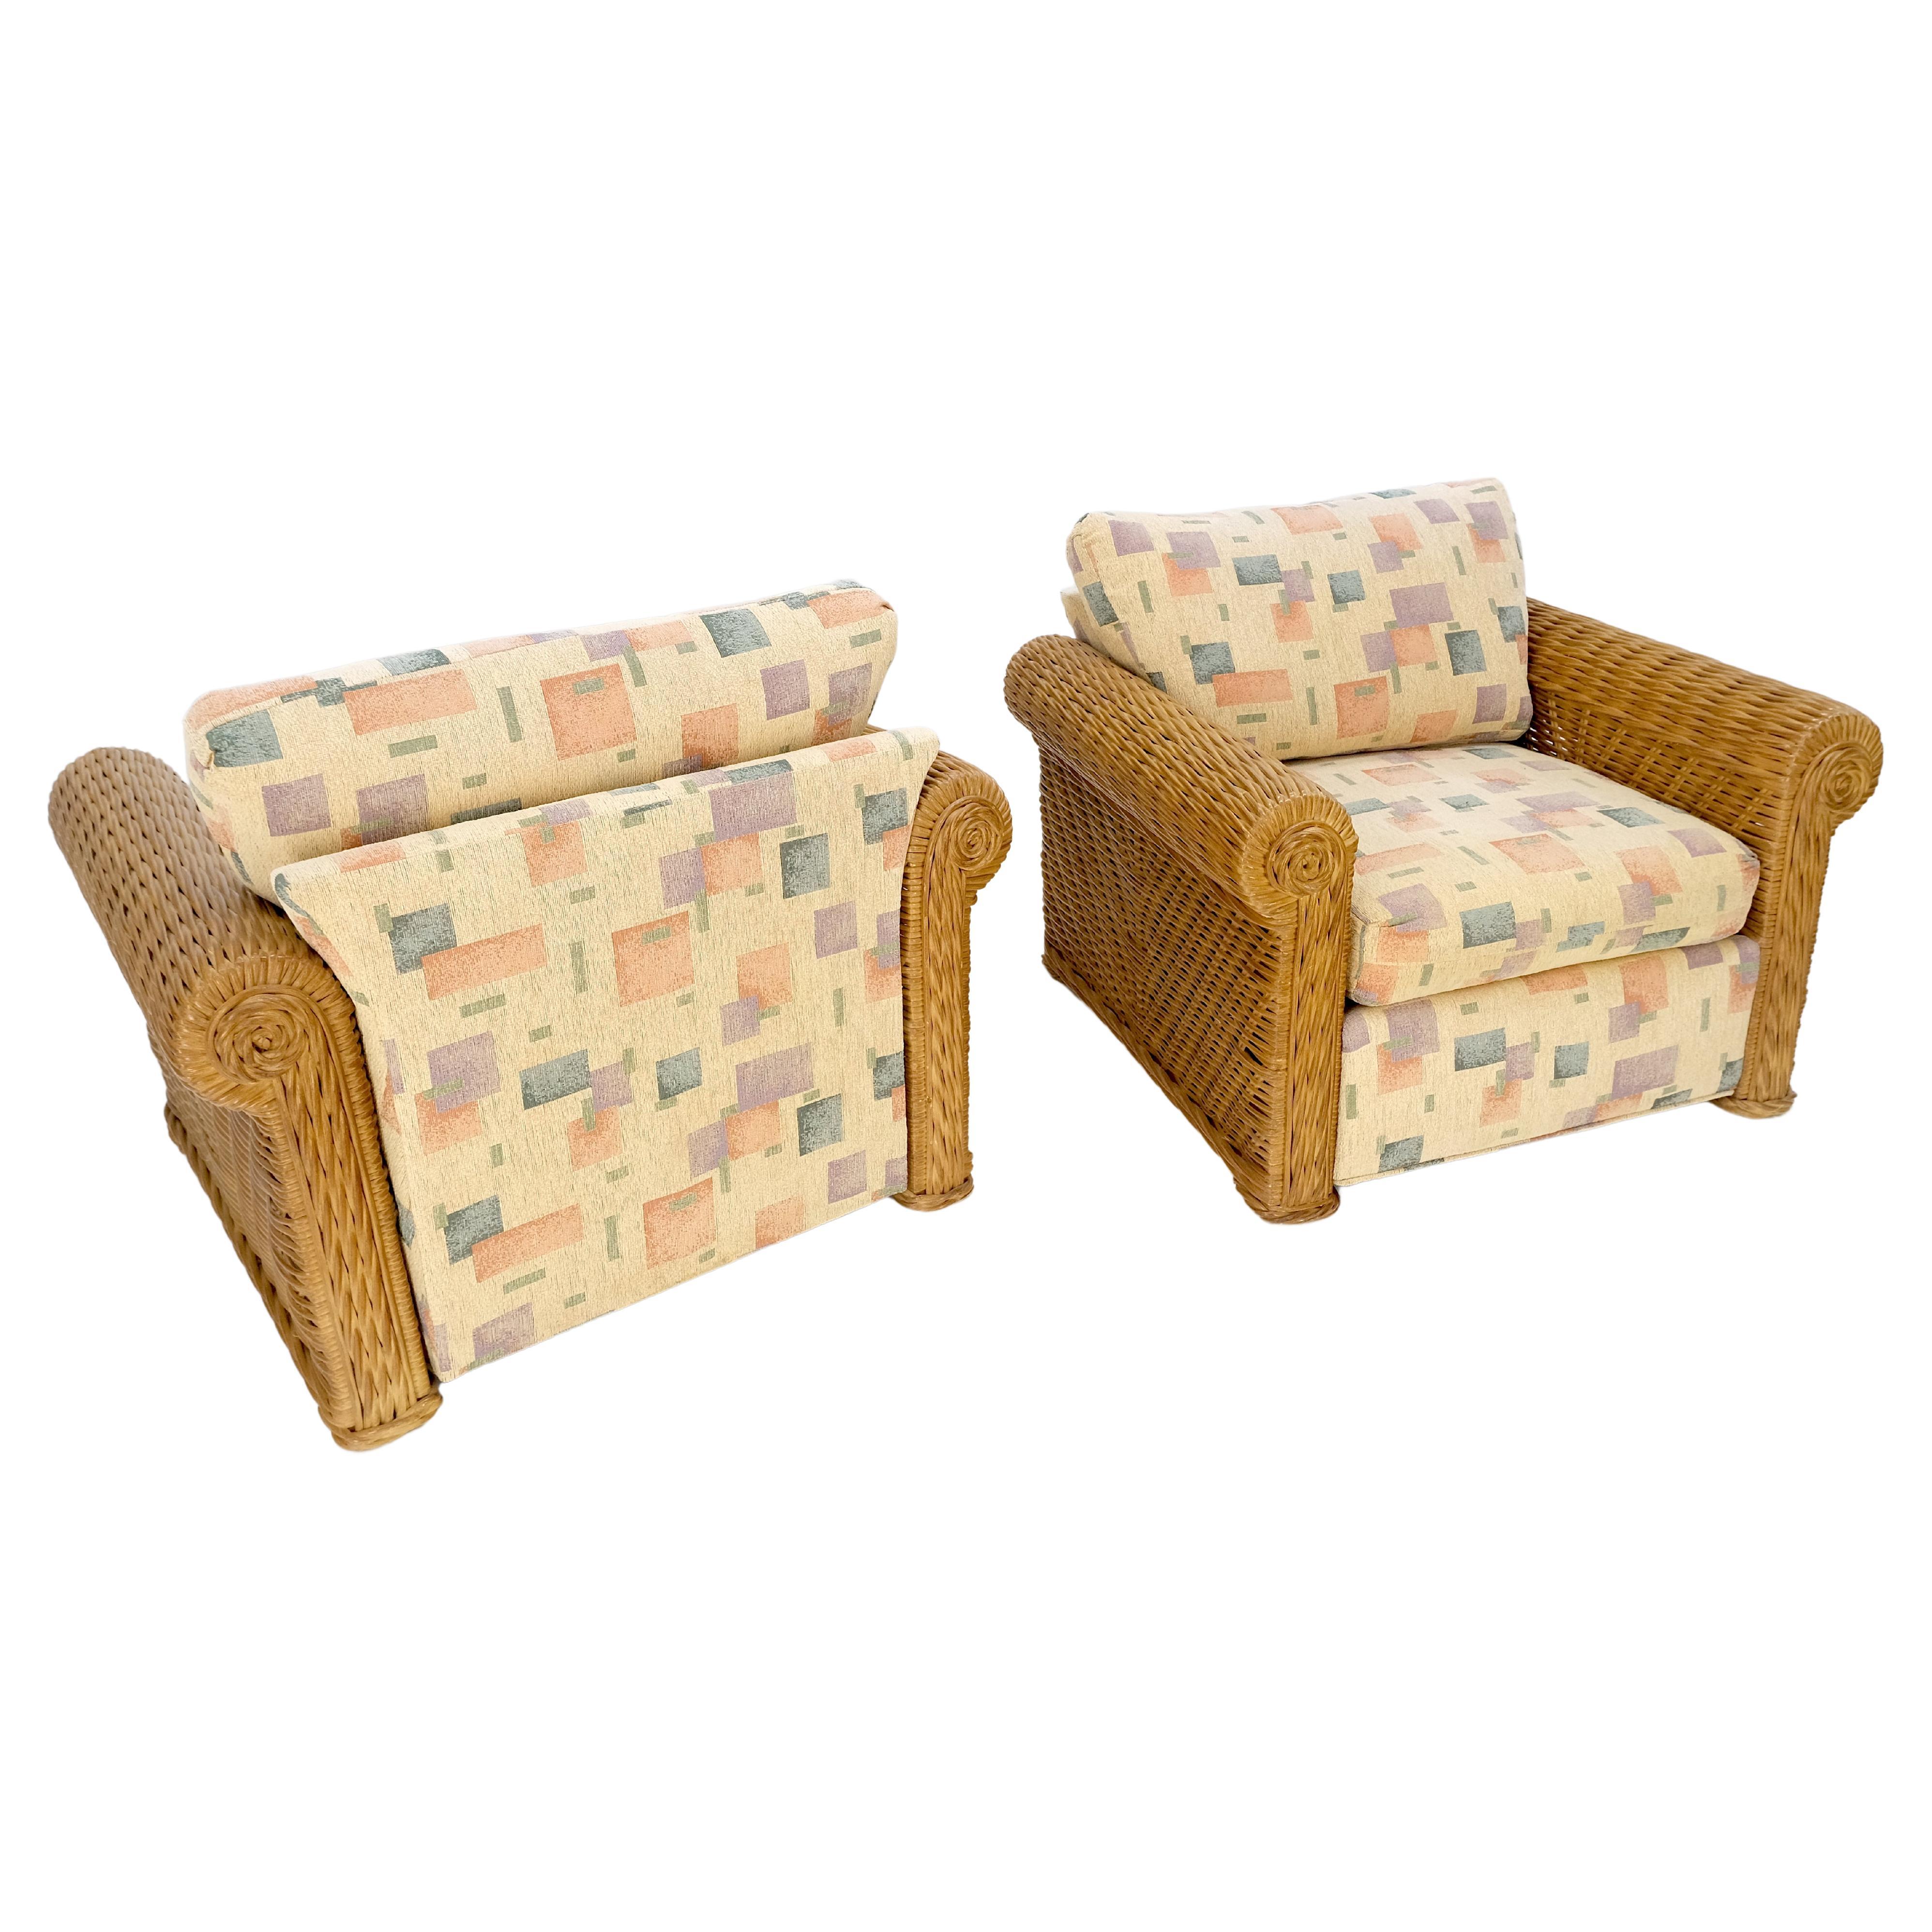 Paar dekorative c1970s Oversize Rttan Bamboo Wicker Club Lounge Stühle Mint!
Geometrischer abstrakter moderner Möbelstoff.